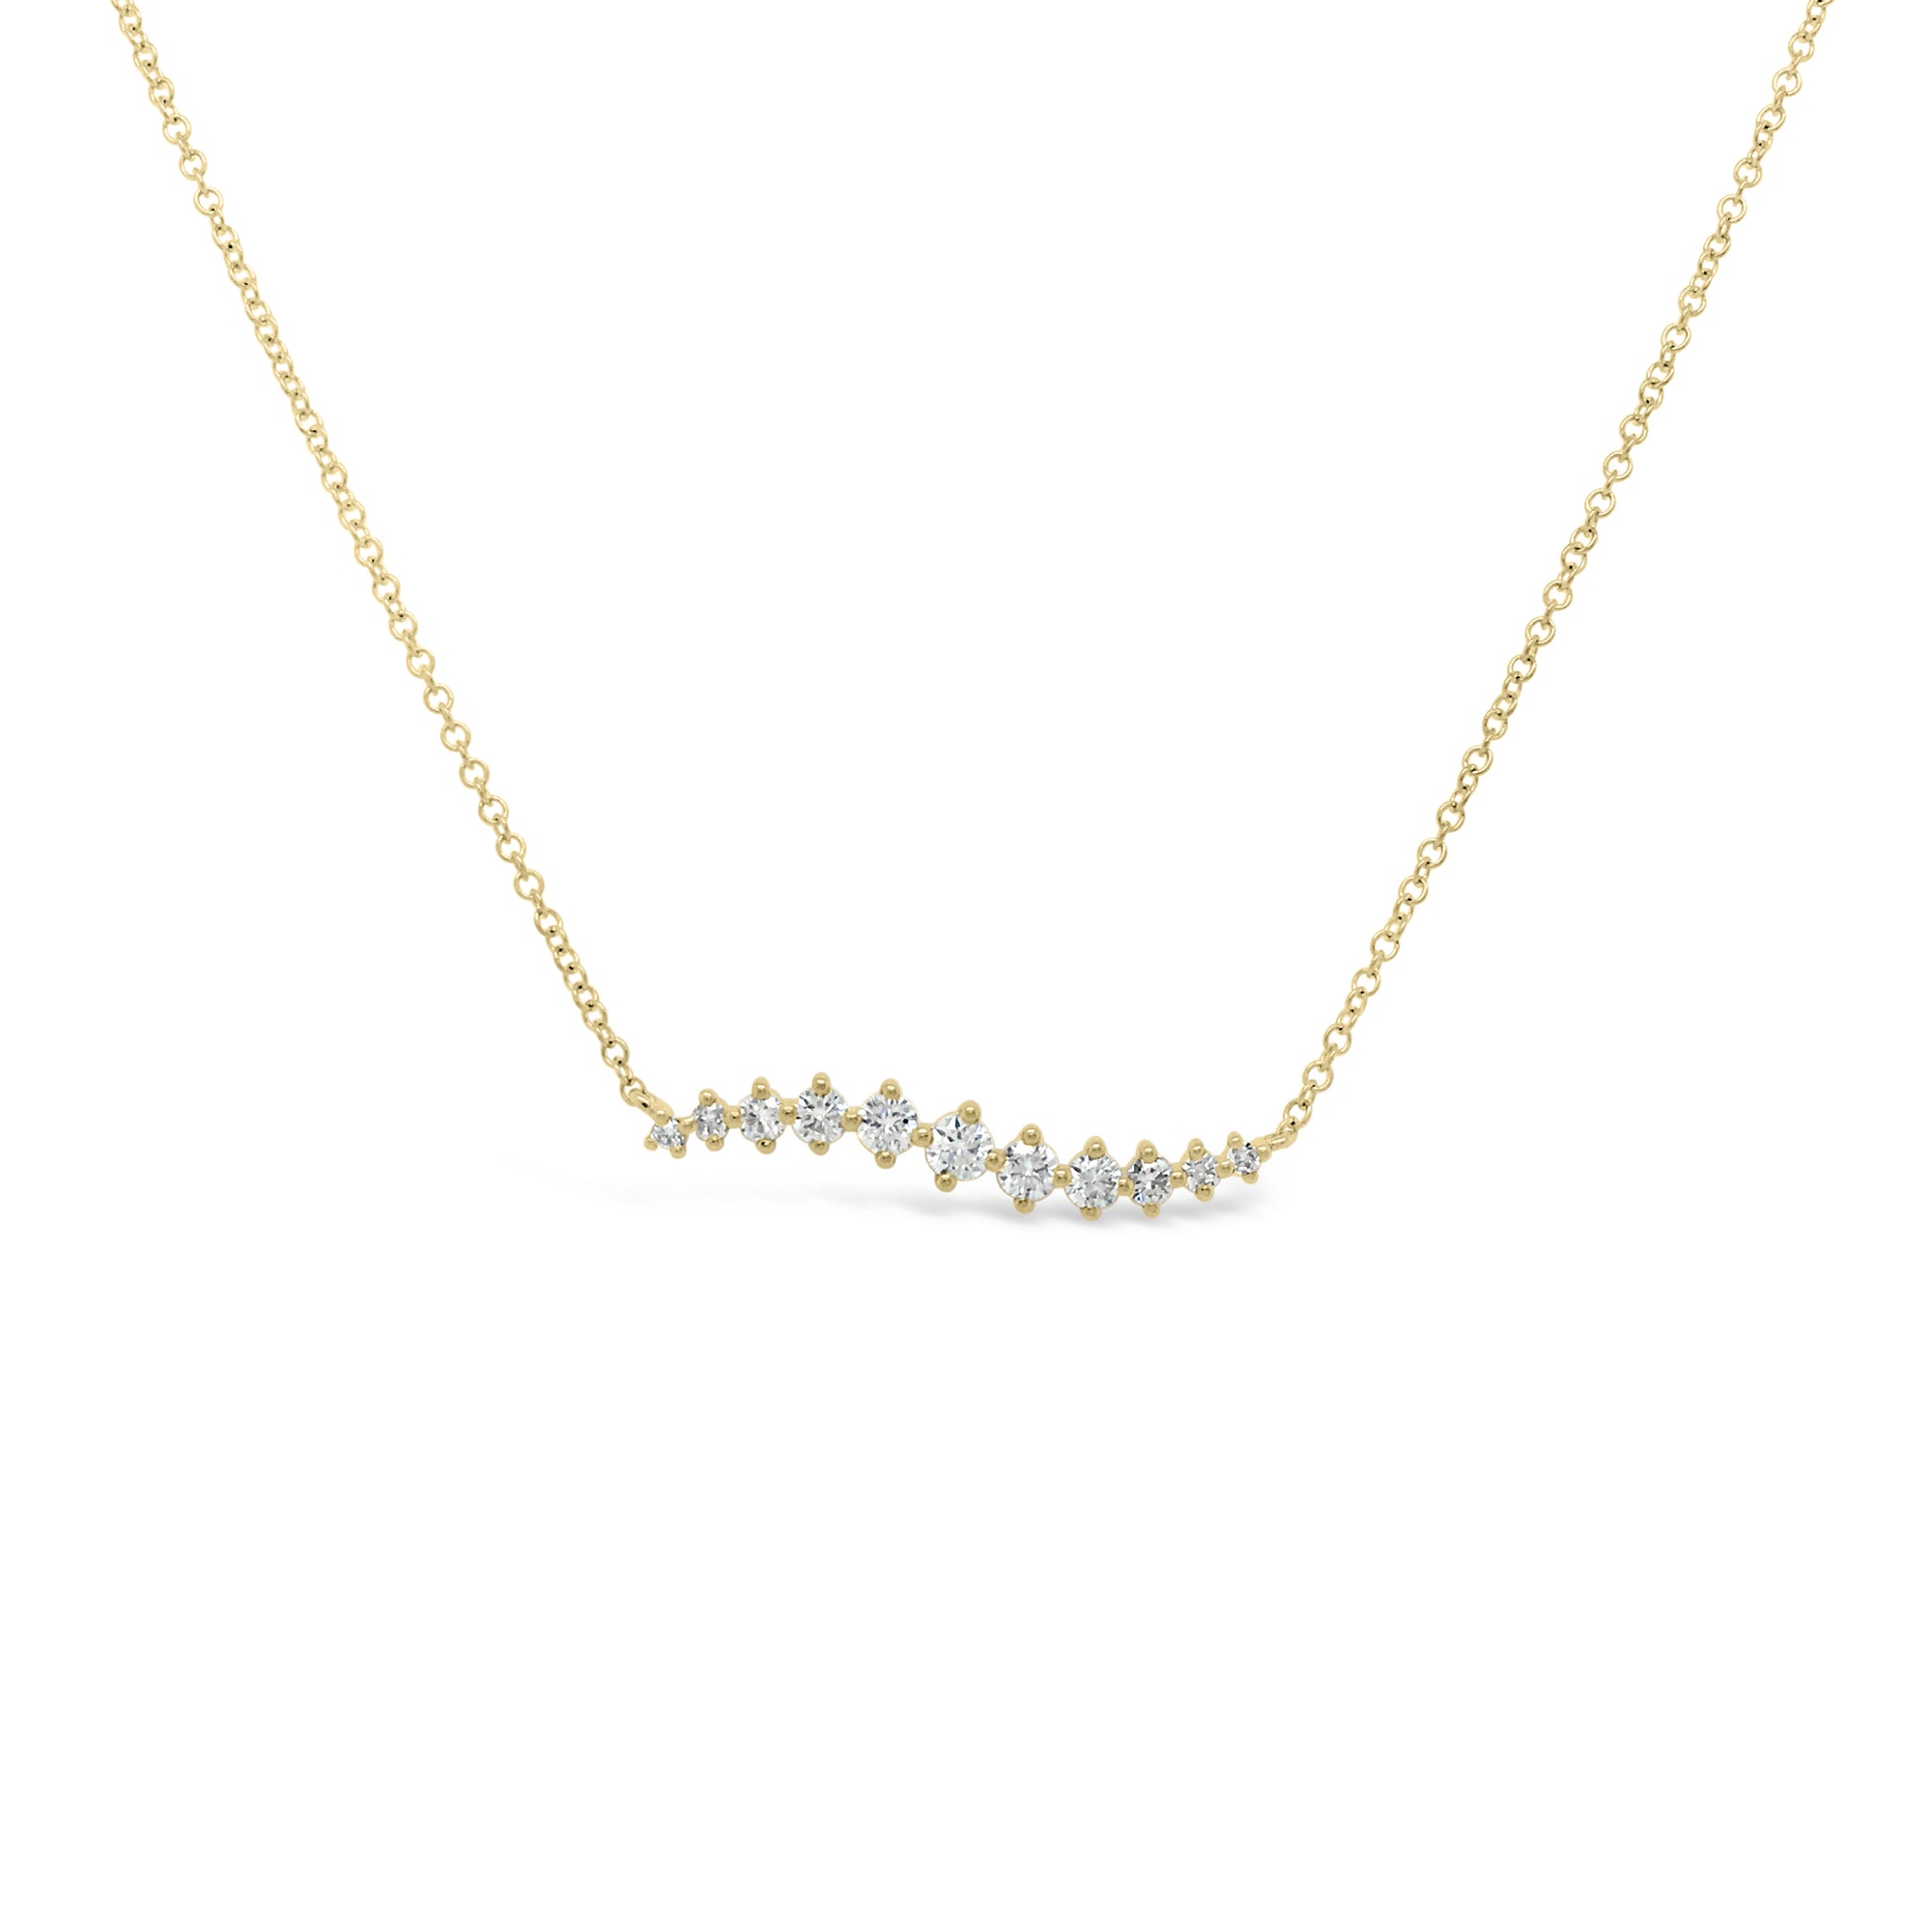 Diamond Wave Bar Necklace.  -14K gold weighing 1.83 grams  -11 round diamonds totaling 0.37 carats